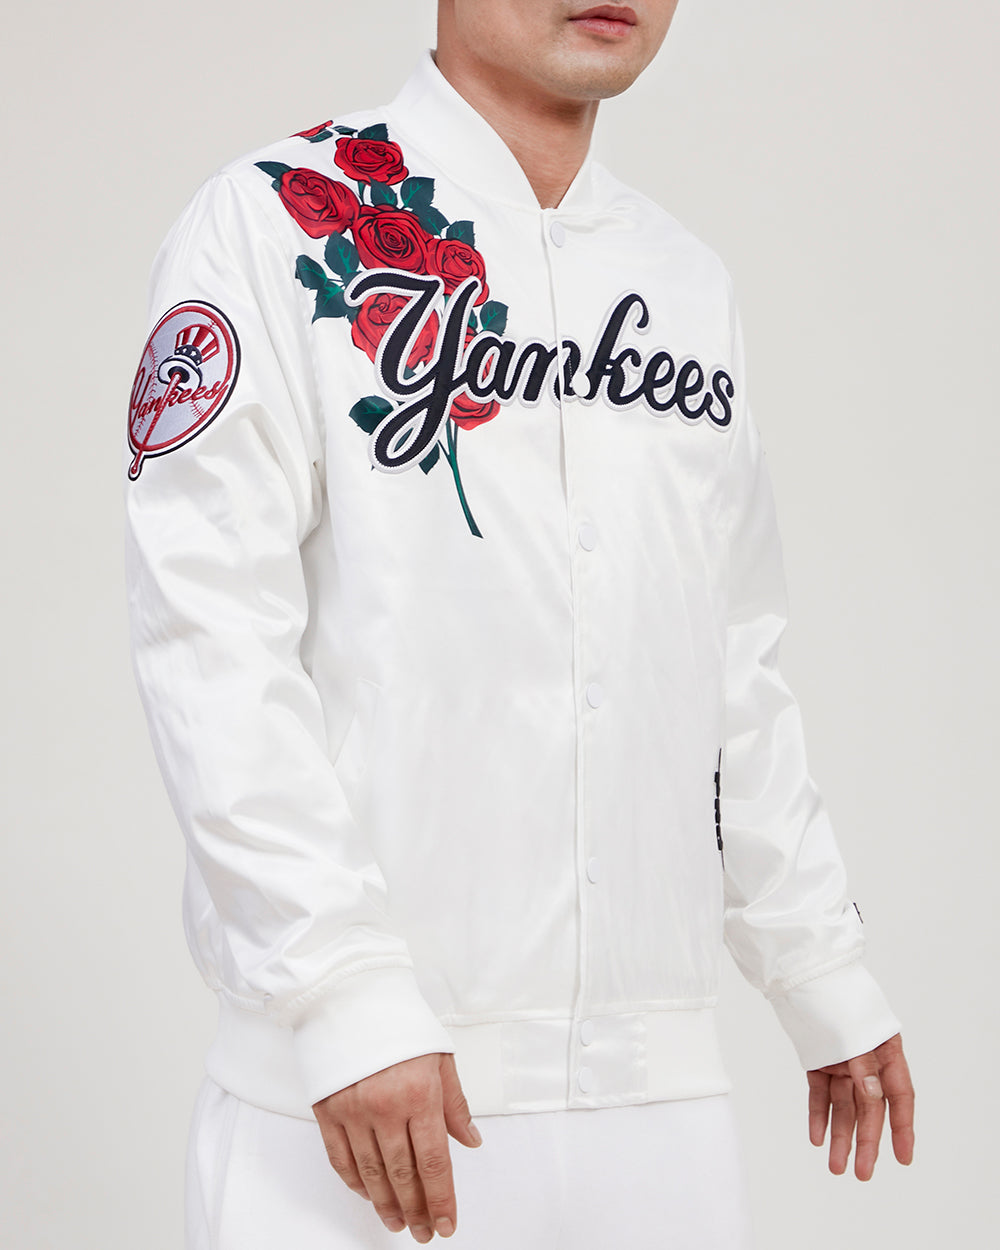 Yankees White Starter Jacket (Big & Tall) » Moiderer's Row : Bronx